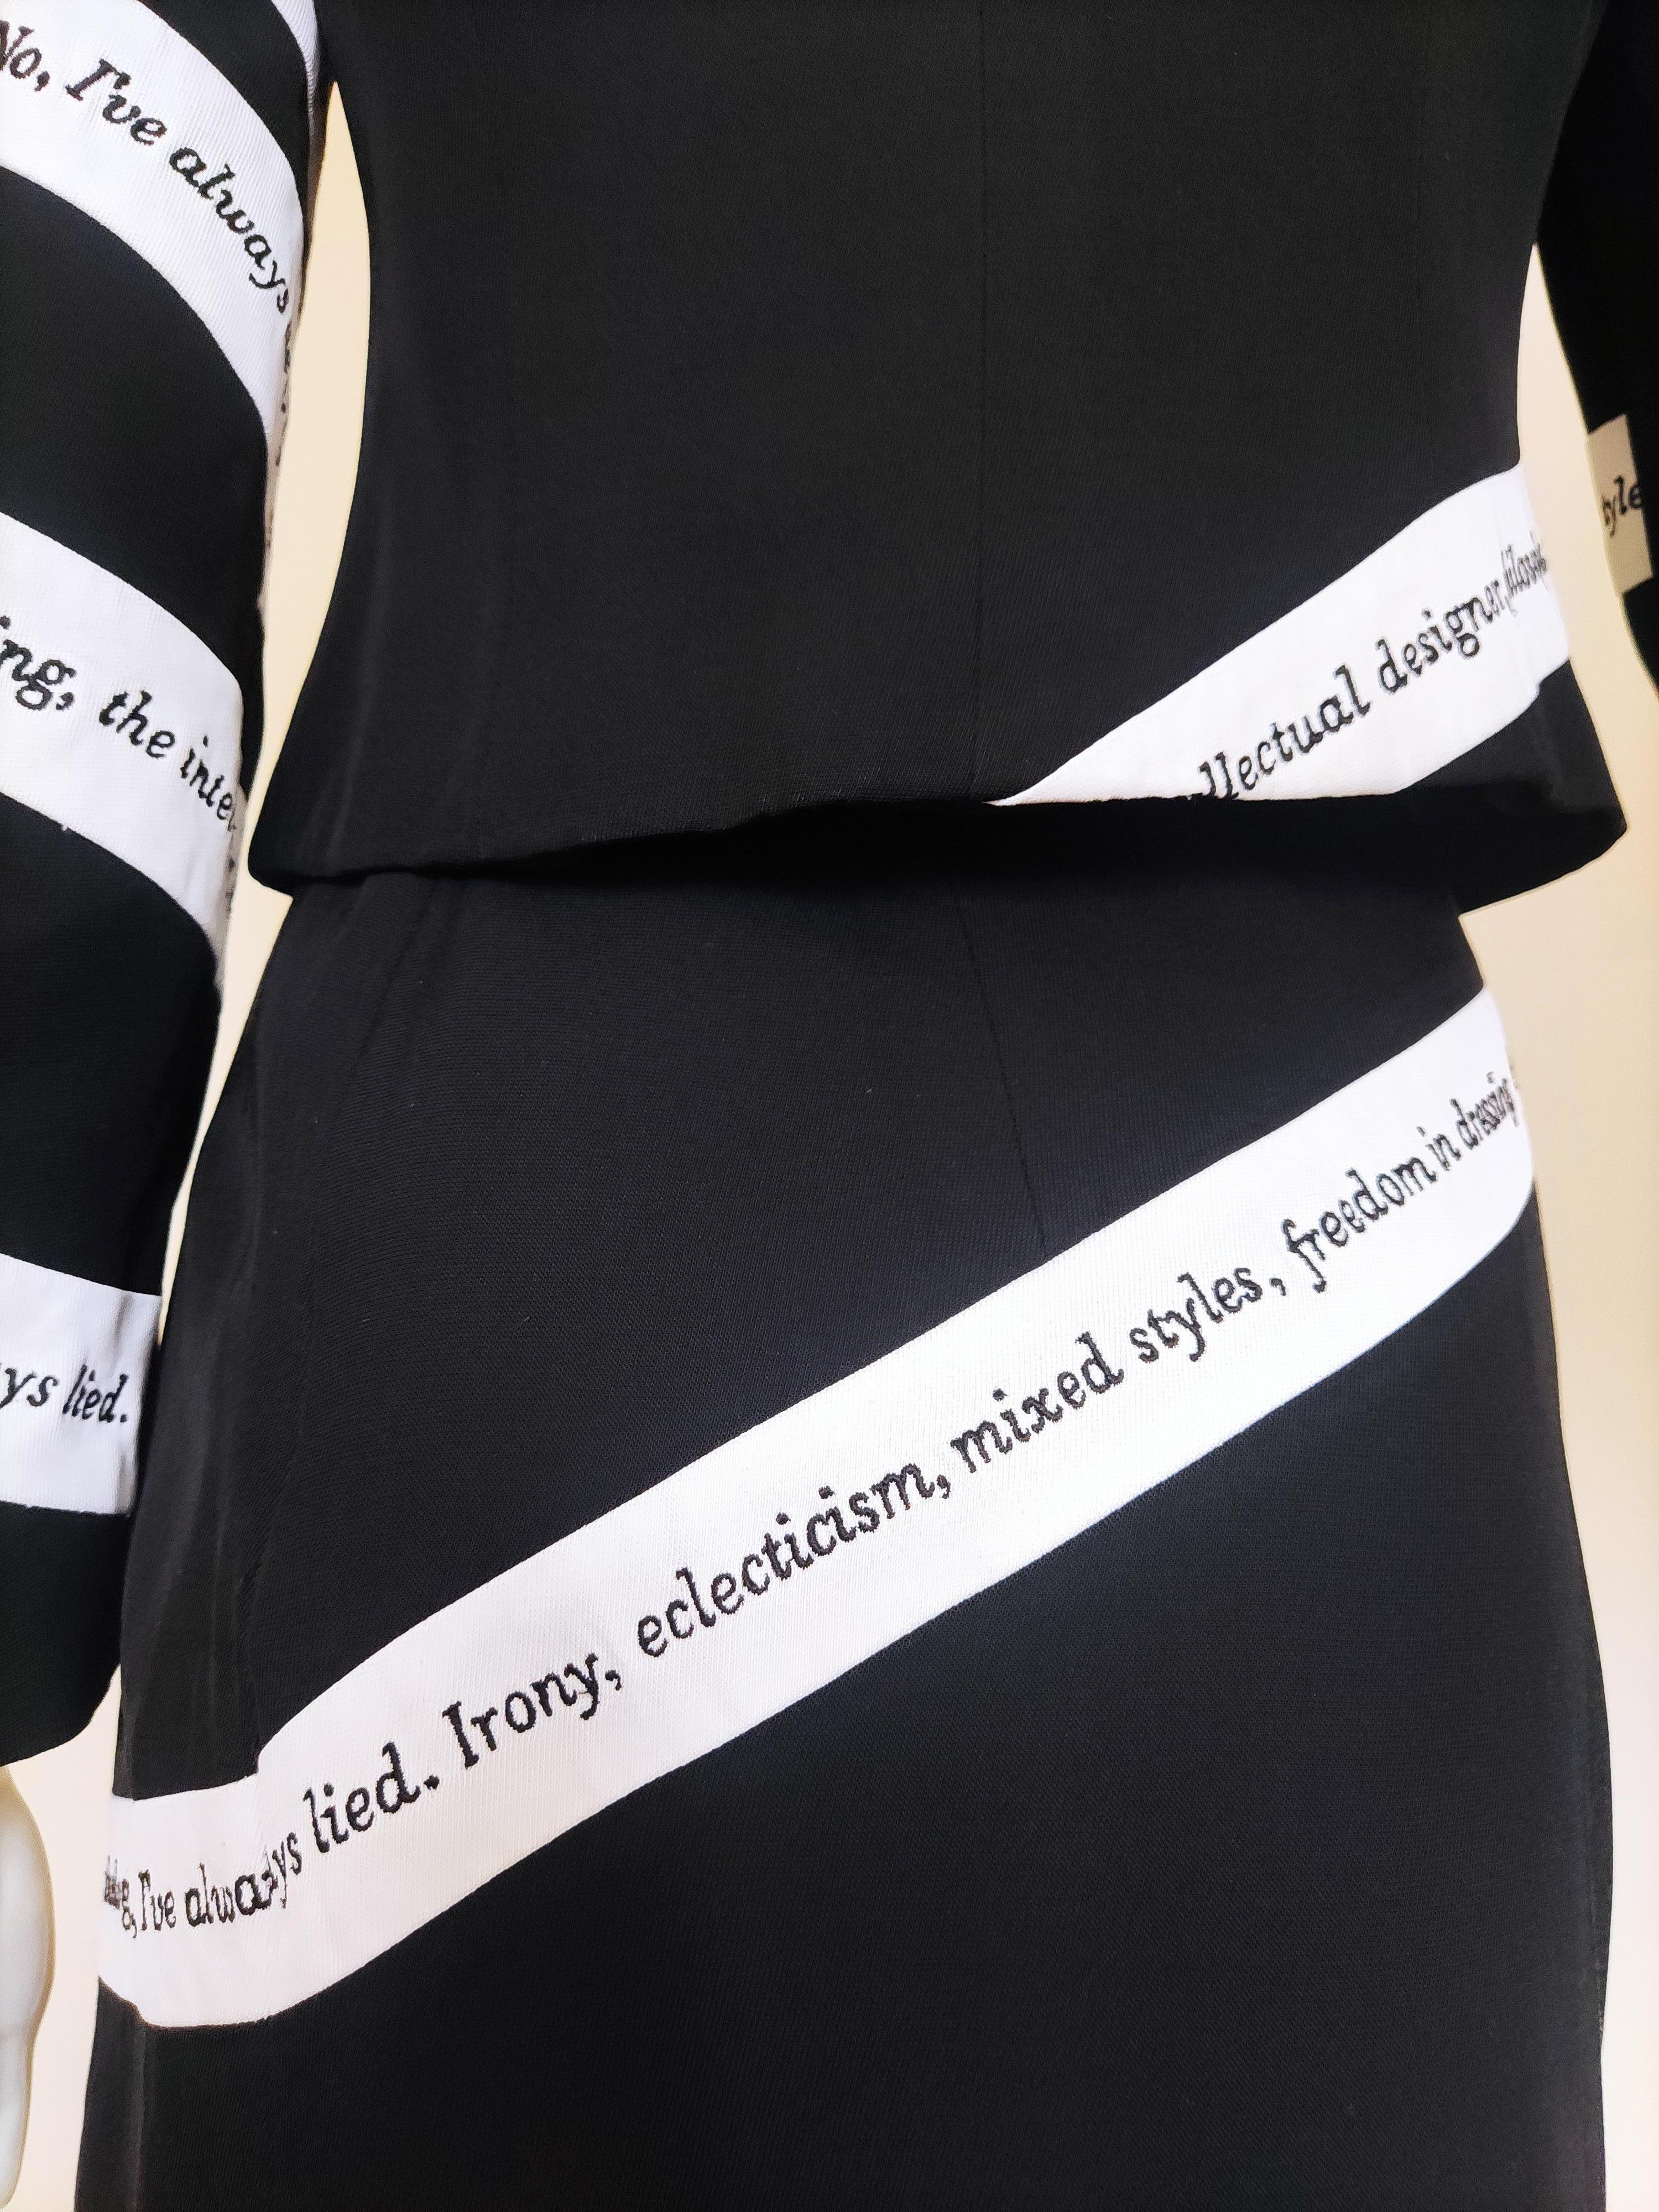 Moschino Cheap and Chic Irony Text Tape Vintage Couture Schwarz-Weißes Kleid Anzug im Angebot 7